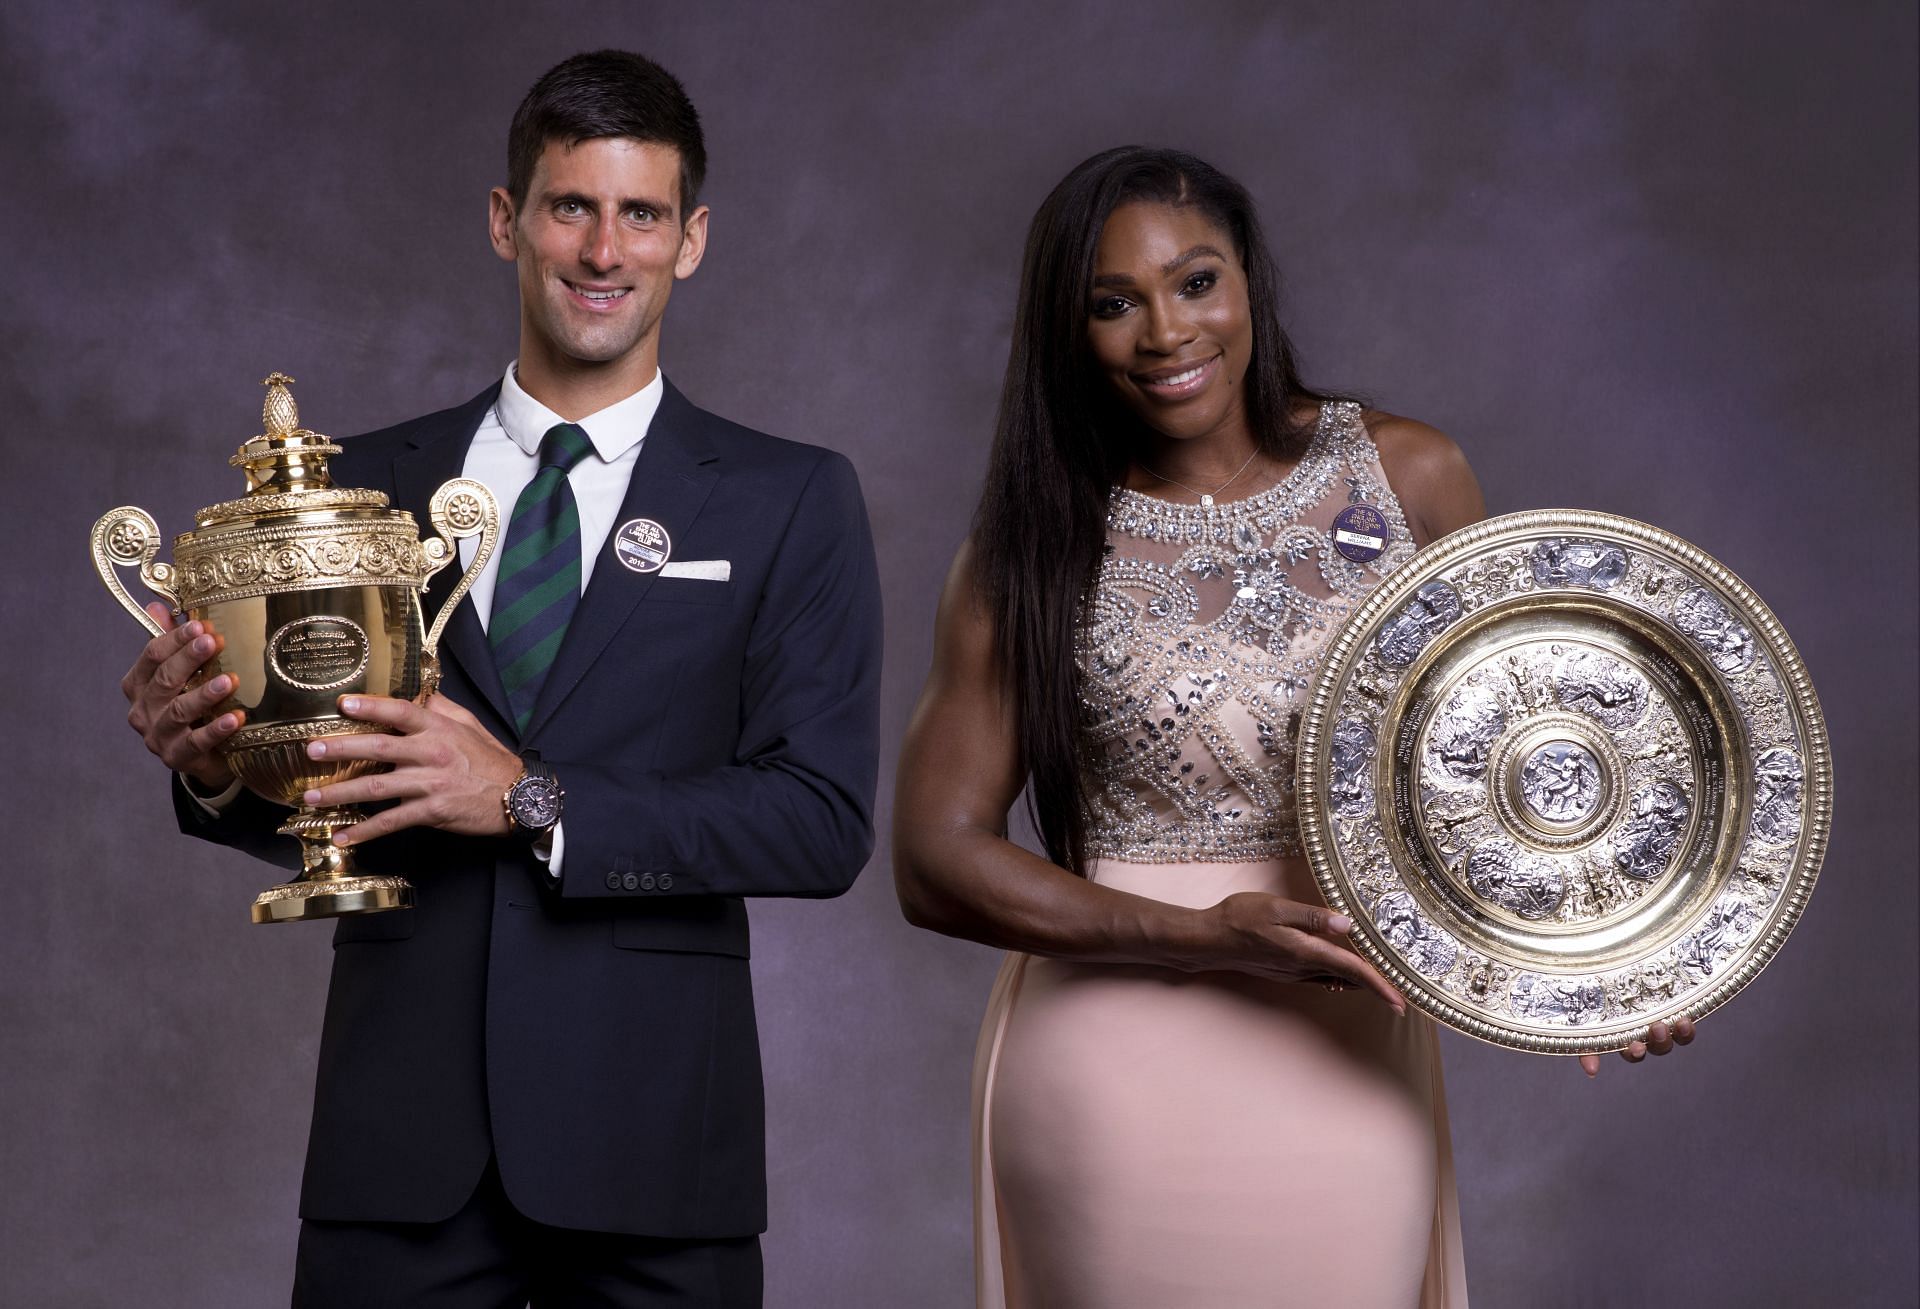 Novak Djokovic and Serena Williams with their 2015 Wimbledon trophies